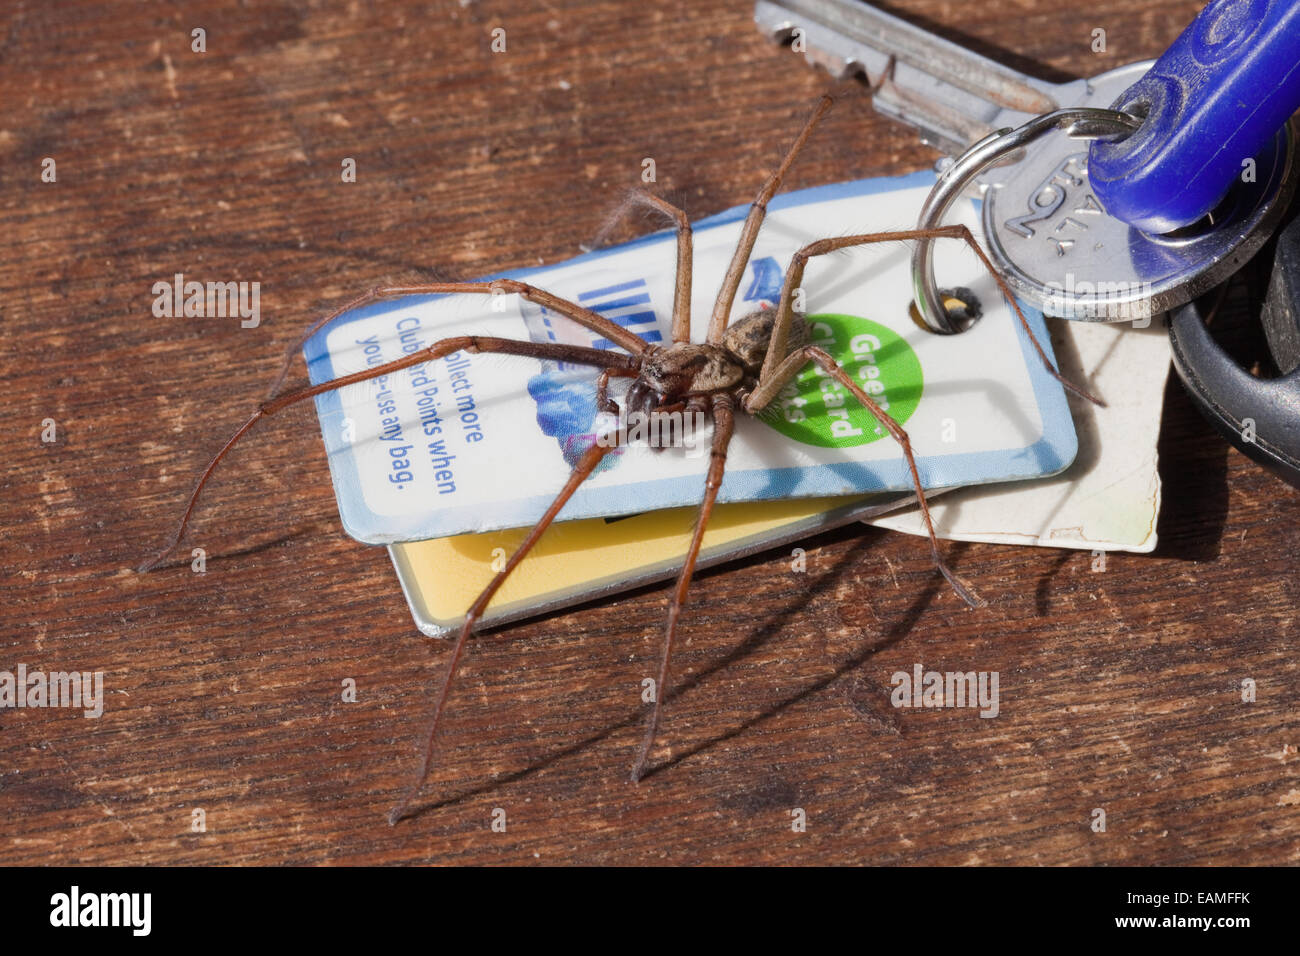 House Spider (Tegenaria domestica). Live and alongside set of car keys for size comparison. Stock Photo